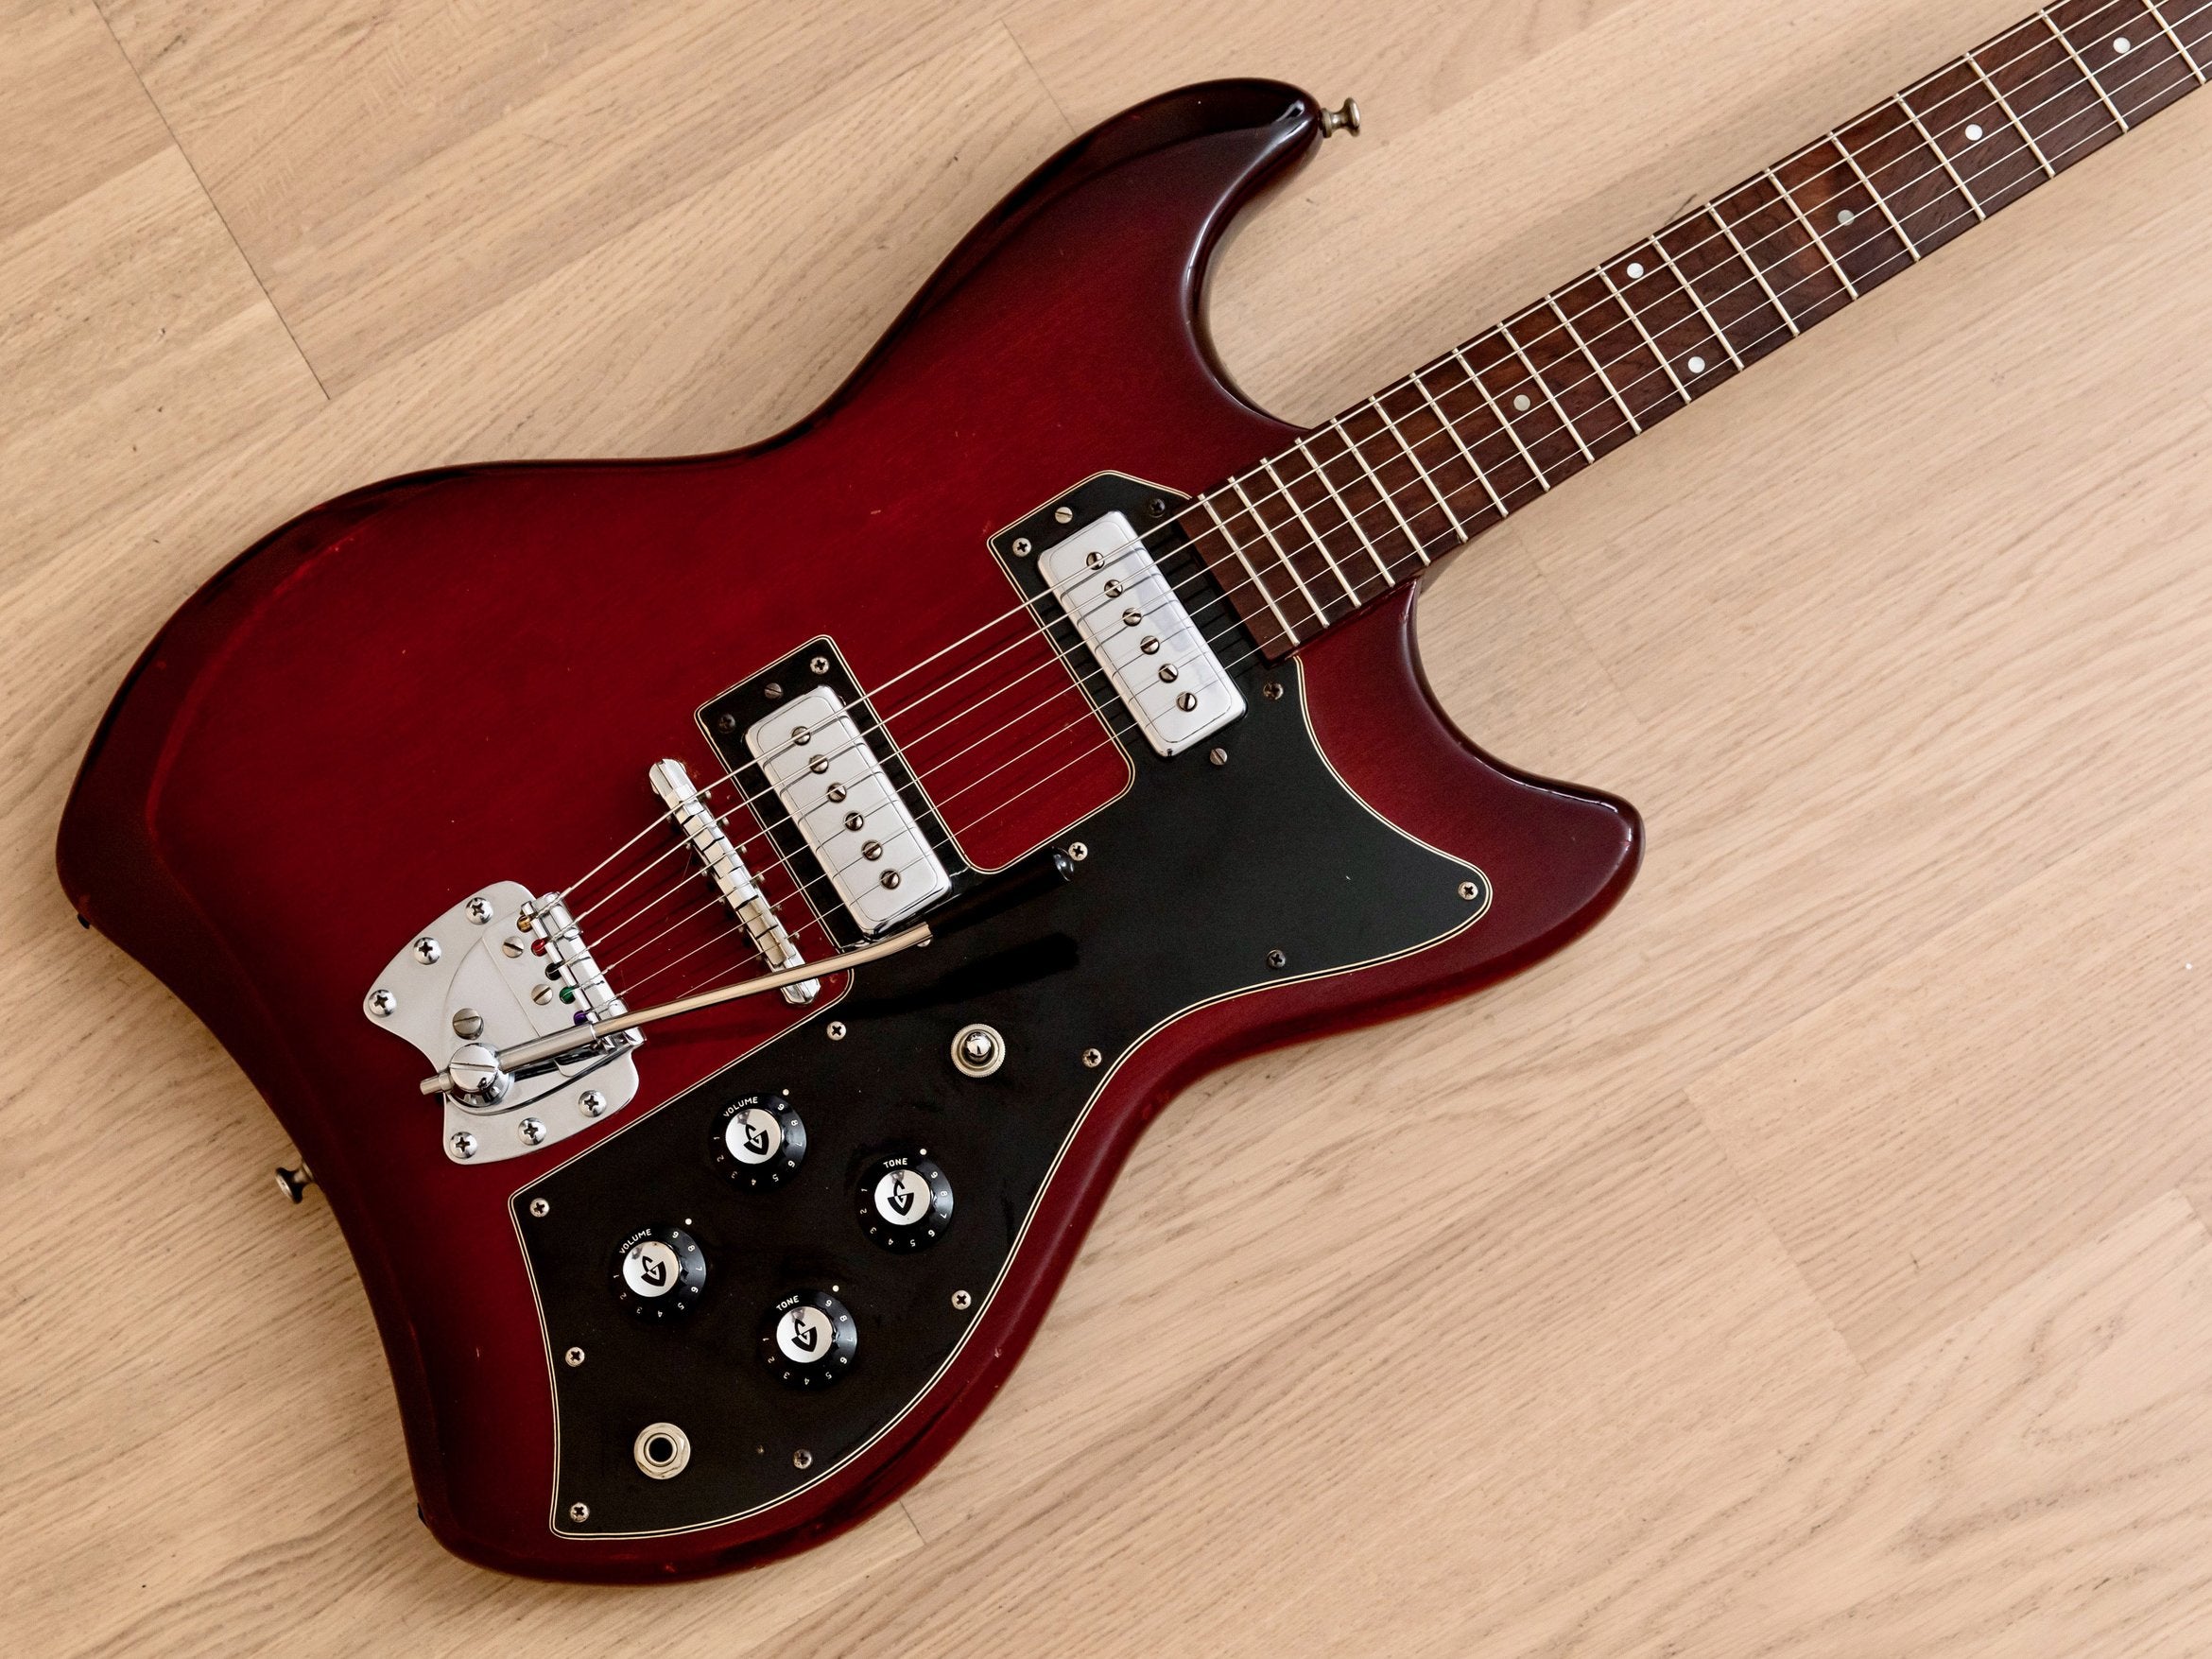 1965 Guild S-100 Polara Vintage Electric Guitar Cherry Red